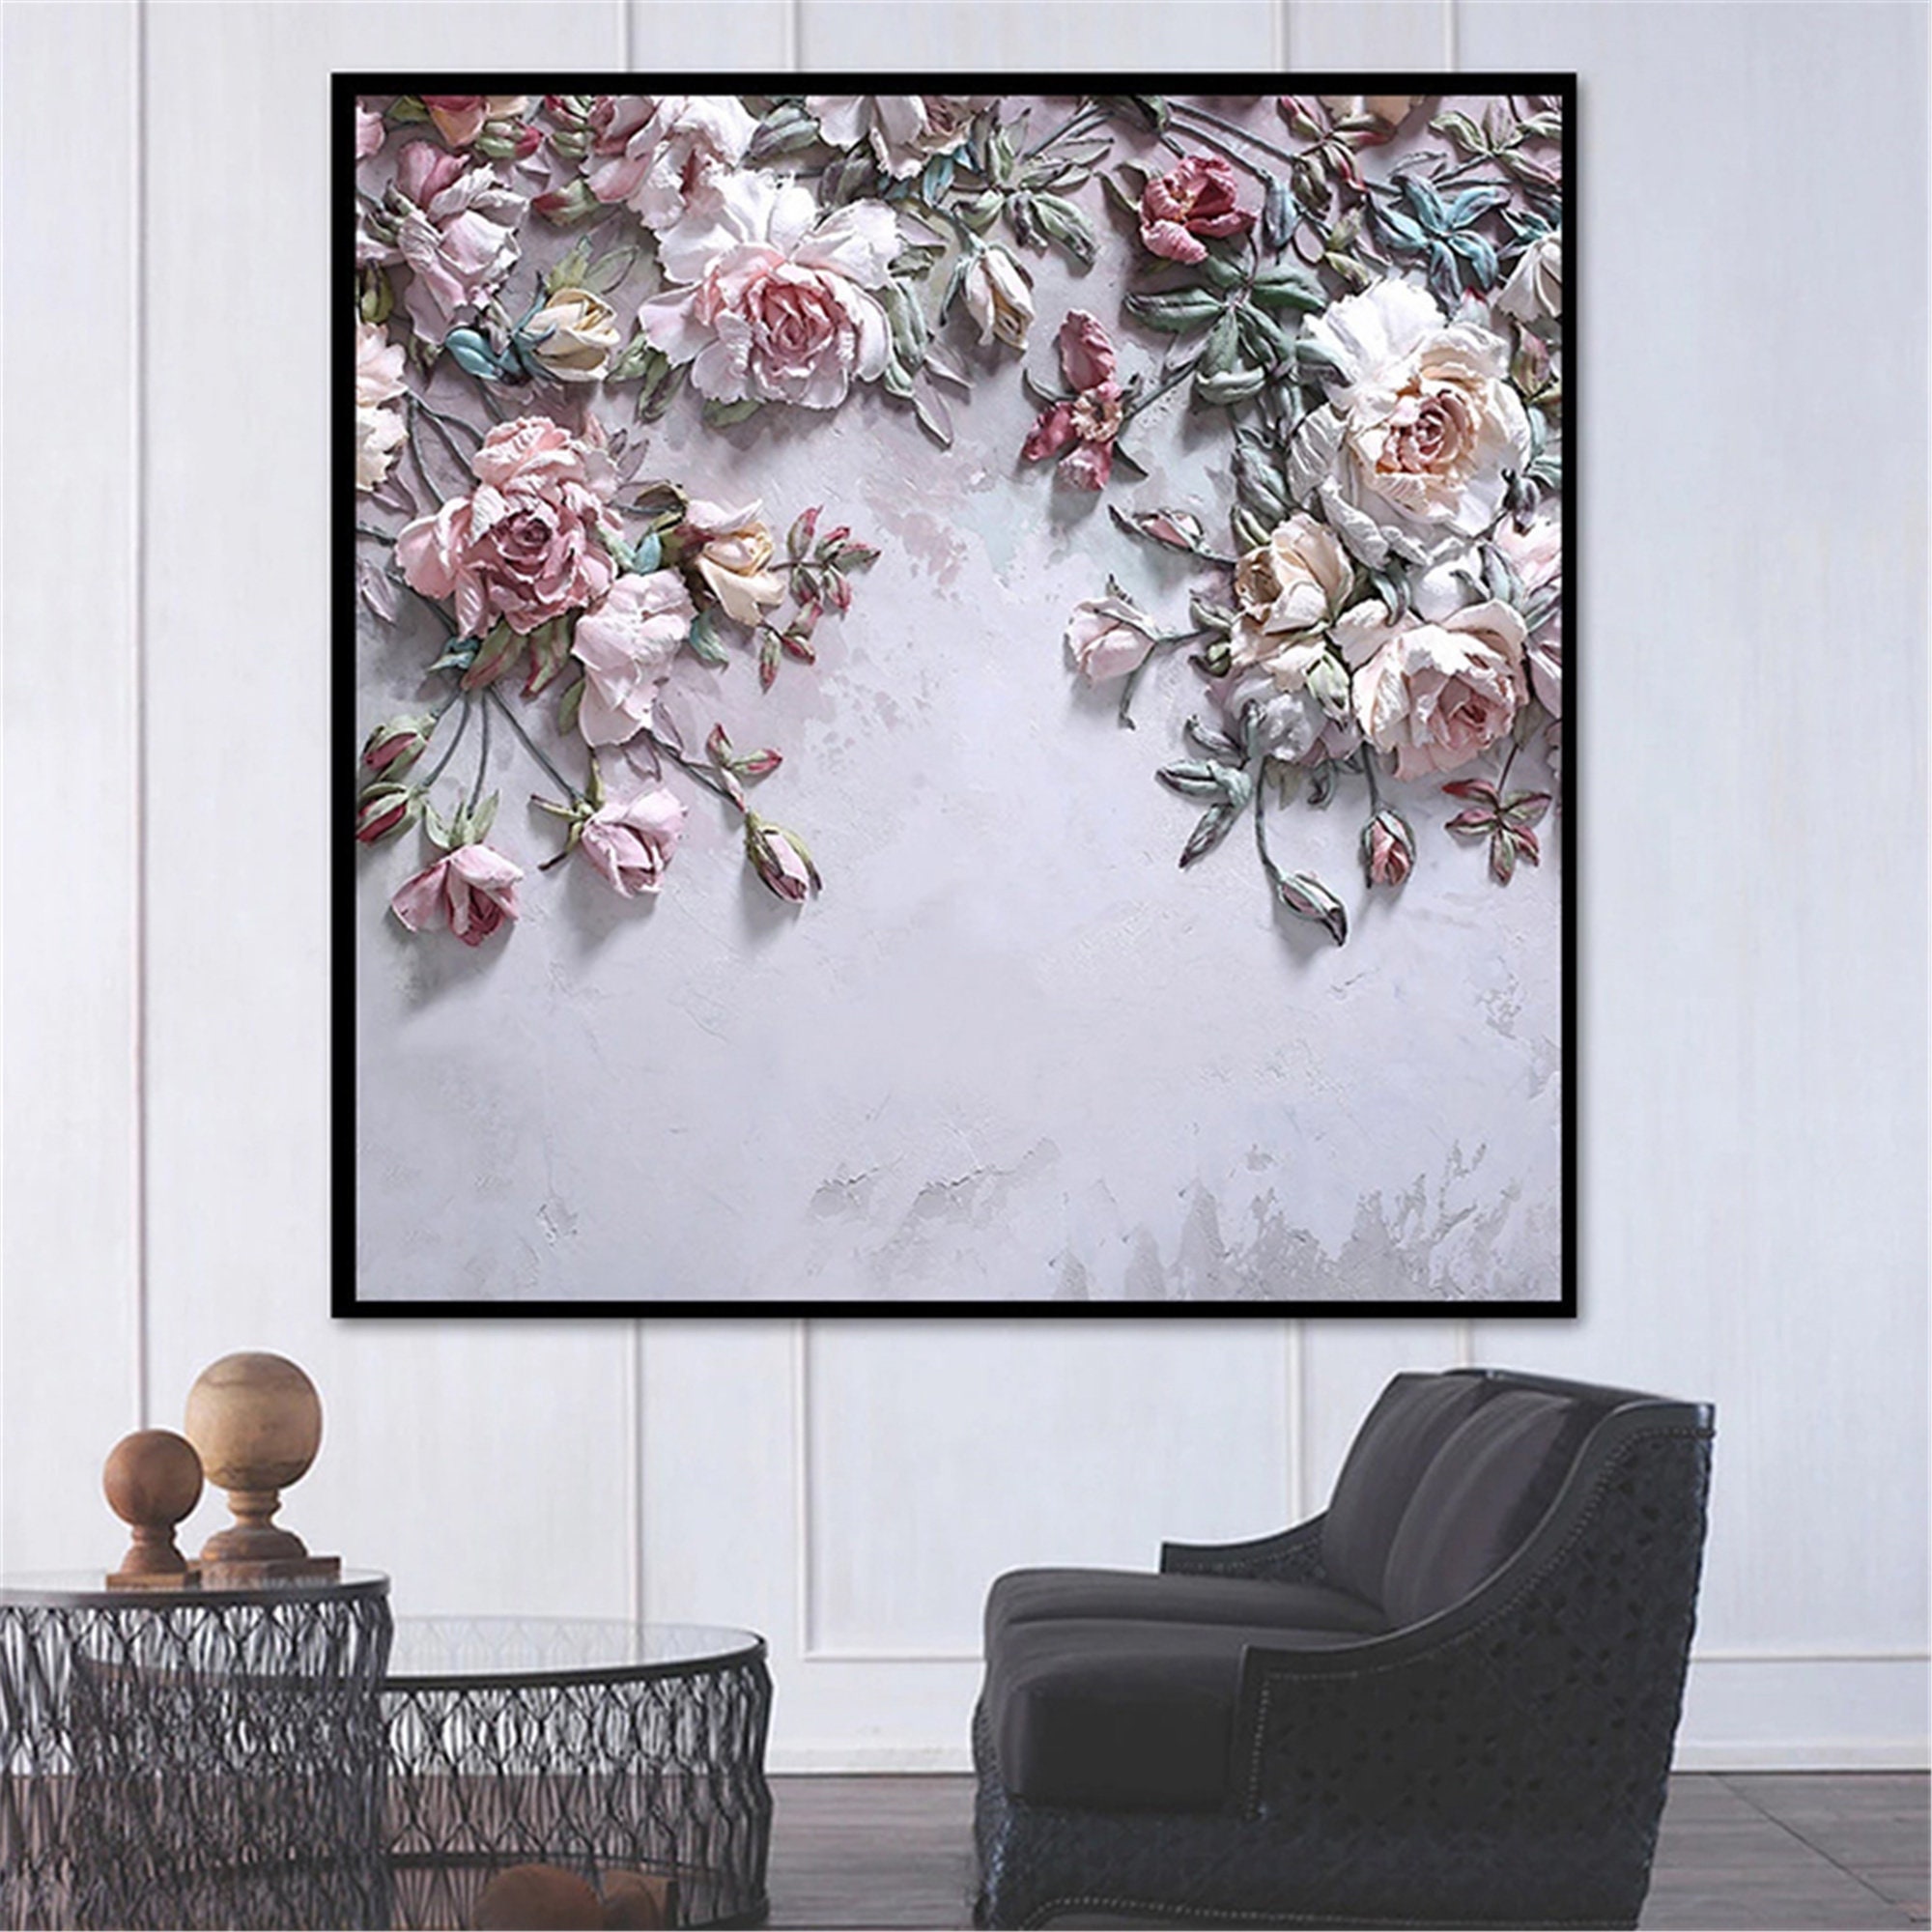 3D Wallpaper Modern Stereo Rose Flowers Photo Wall Murals | Etsy